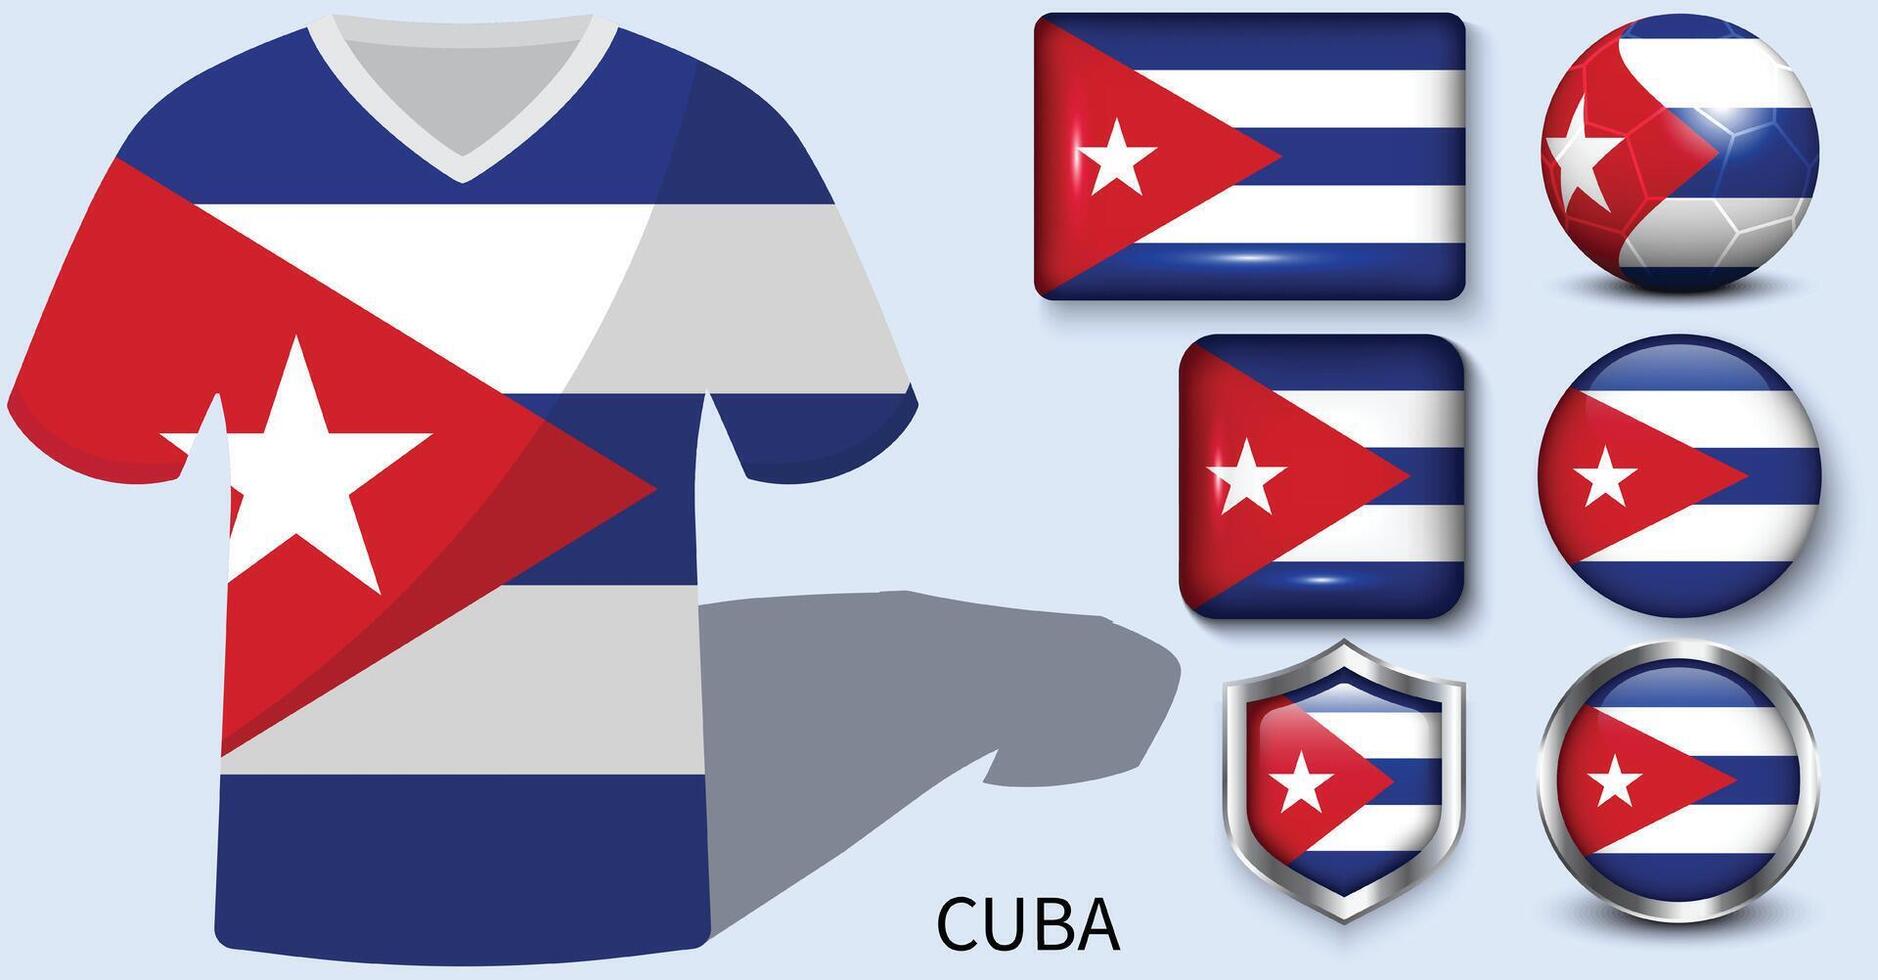 Cuba drapeau collection, Football maillots de Cuba vecteur